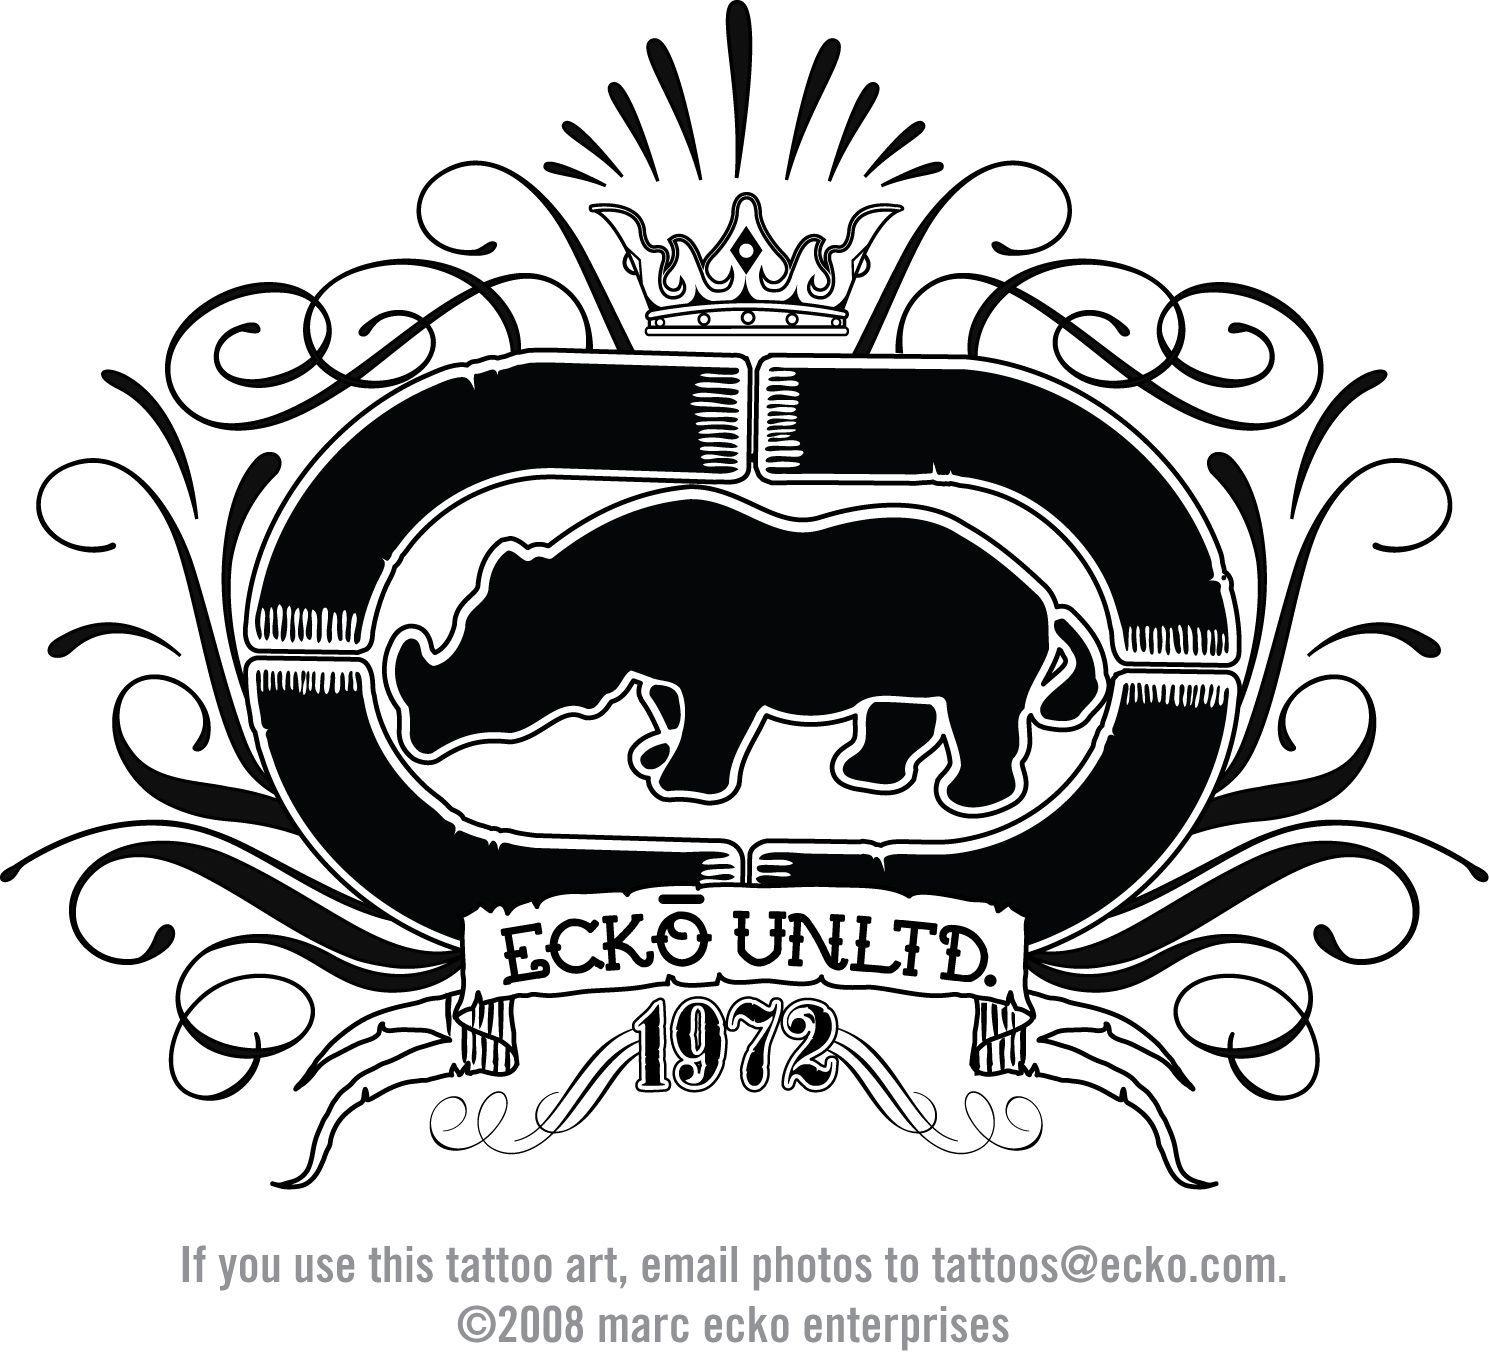 Ecko Unlimited Logo - Ecko Unltd Logo Wallpaper 2016-2017 | Men's fashion | Logos ...